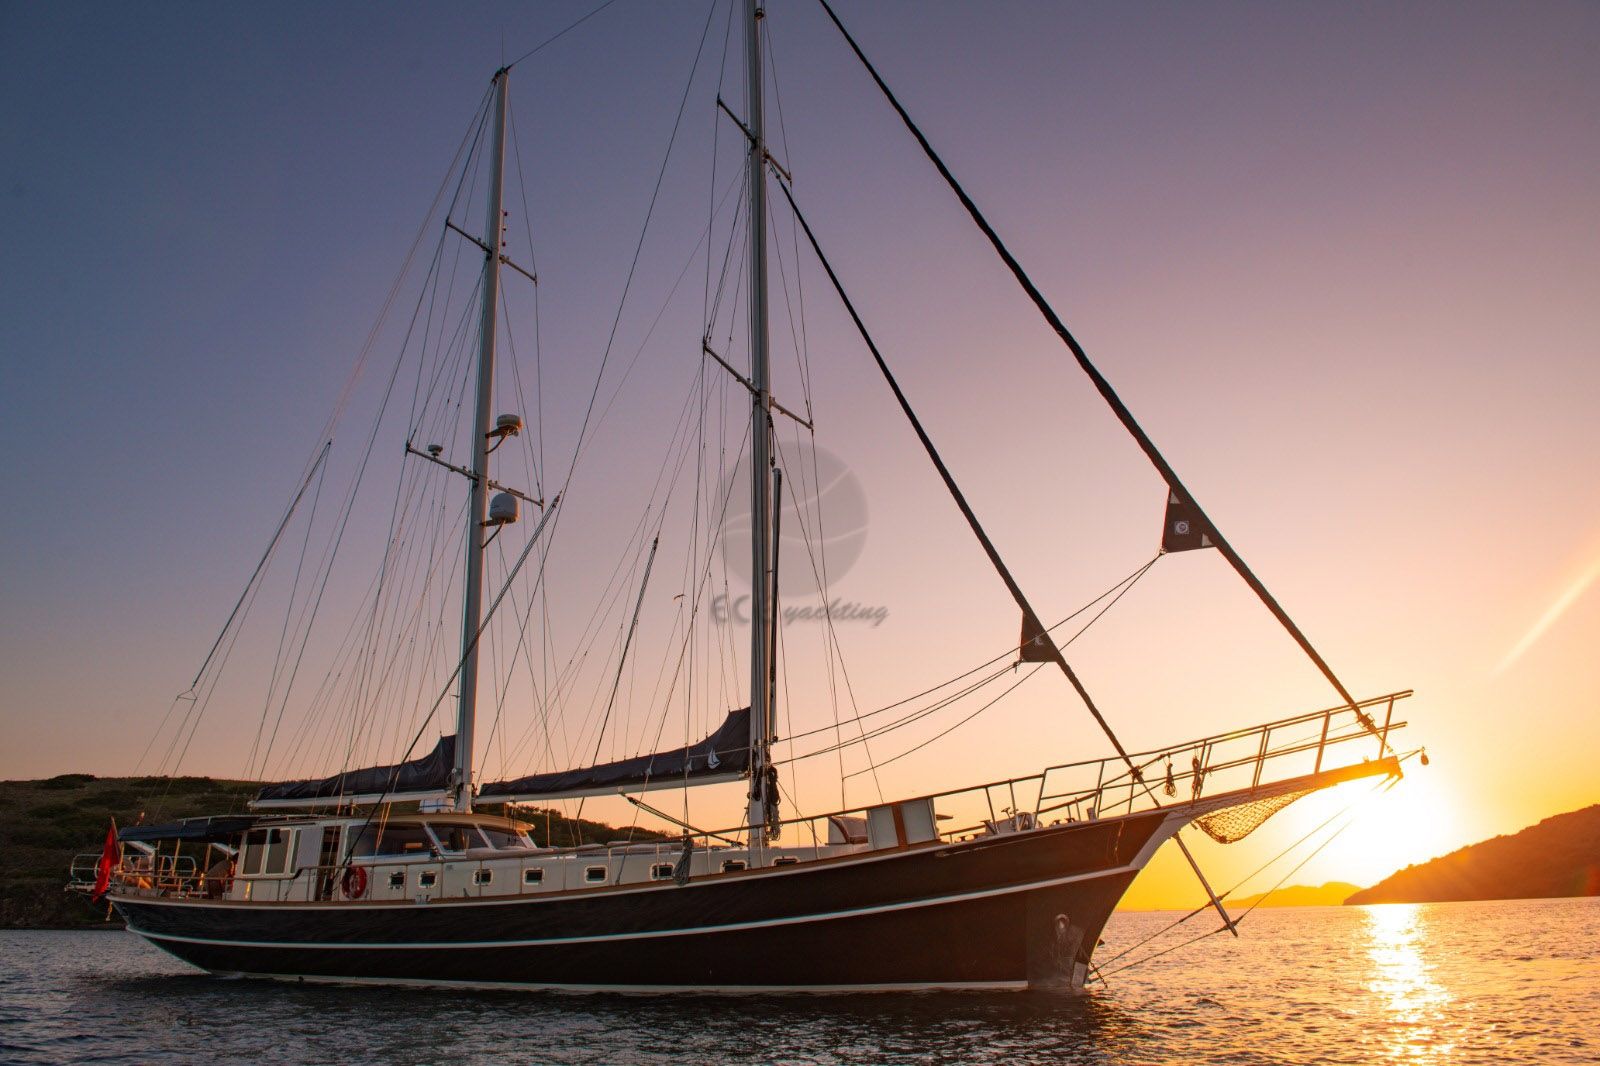 Aegean Pearl Gulet, Sailing The Sunset.